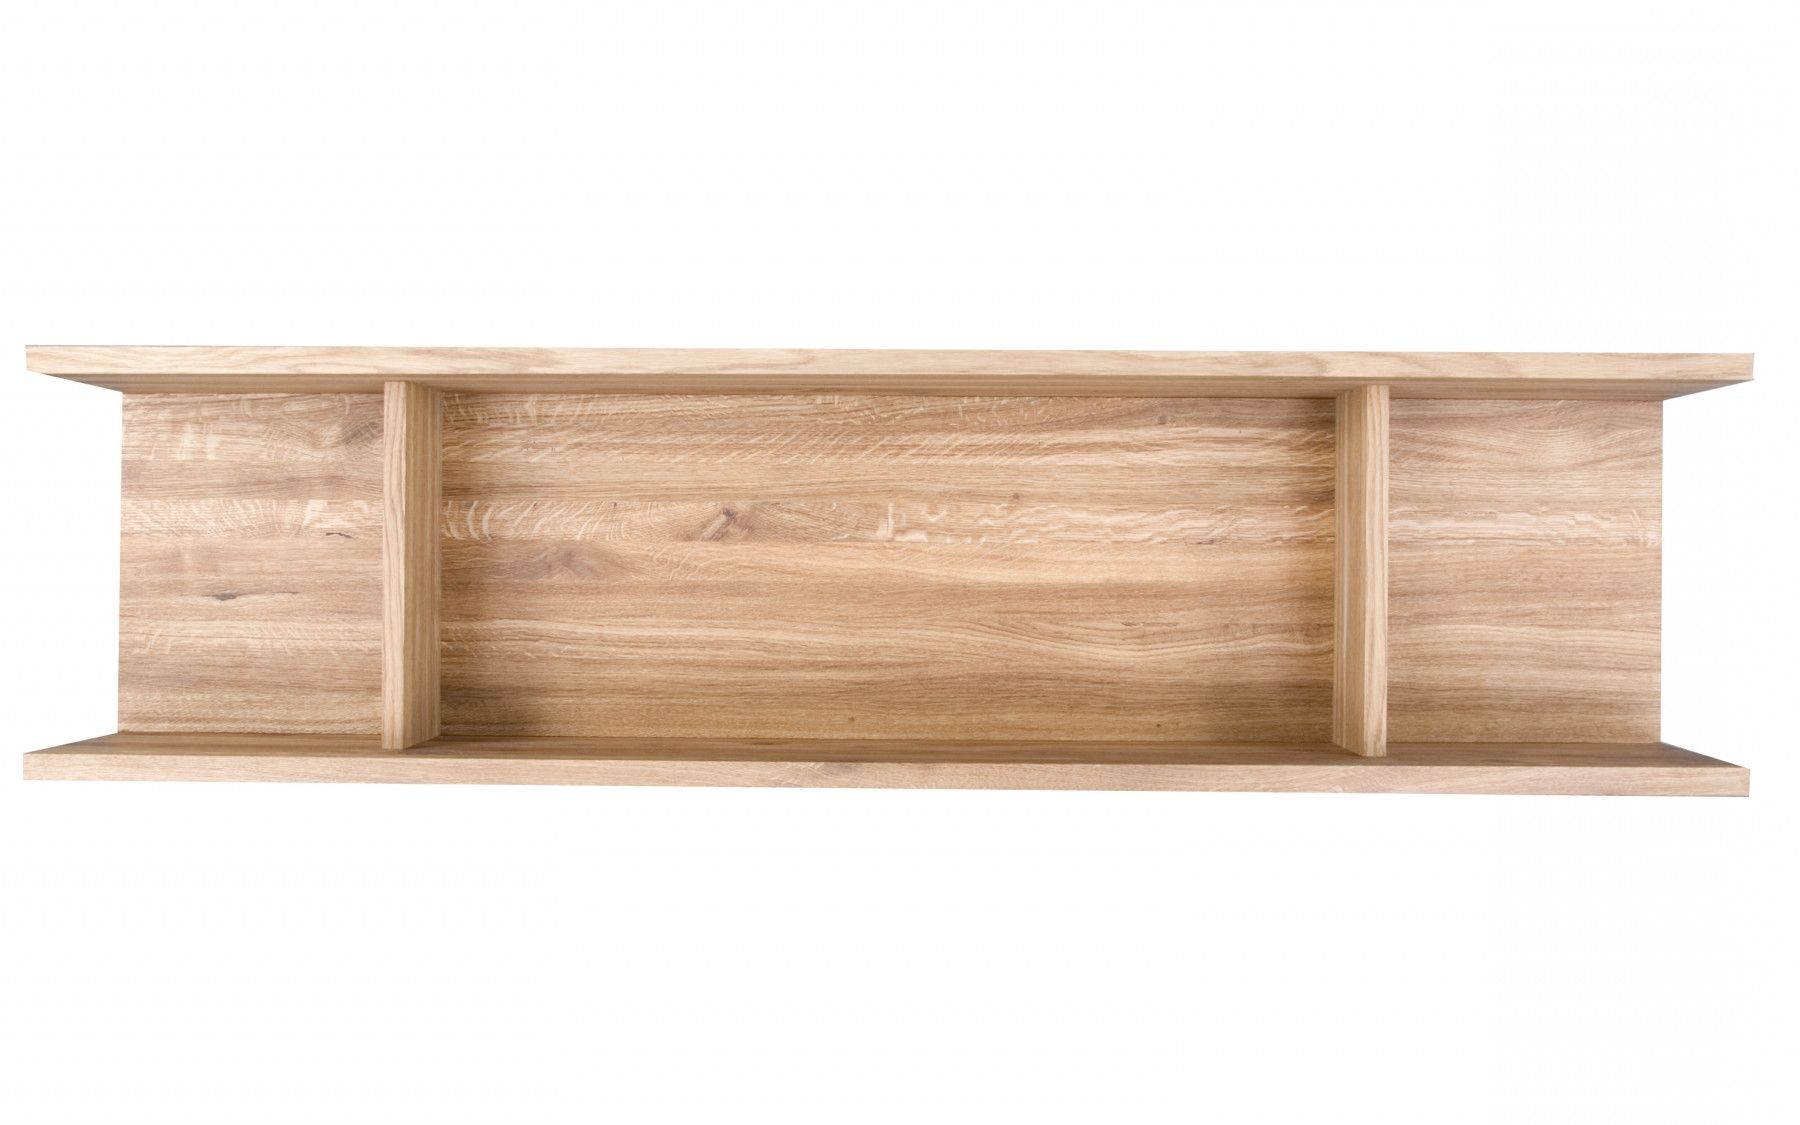 Oak Wall Shelves With Regard To 2017 Massive Rustic Solid Oak Wall Shelf, Type (View 11 of 15)